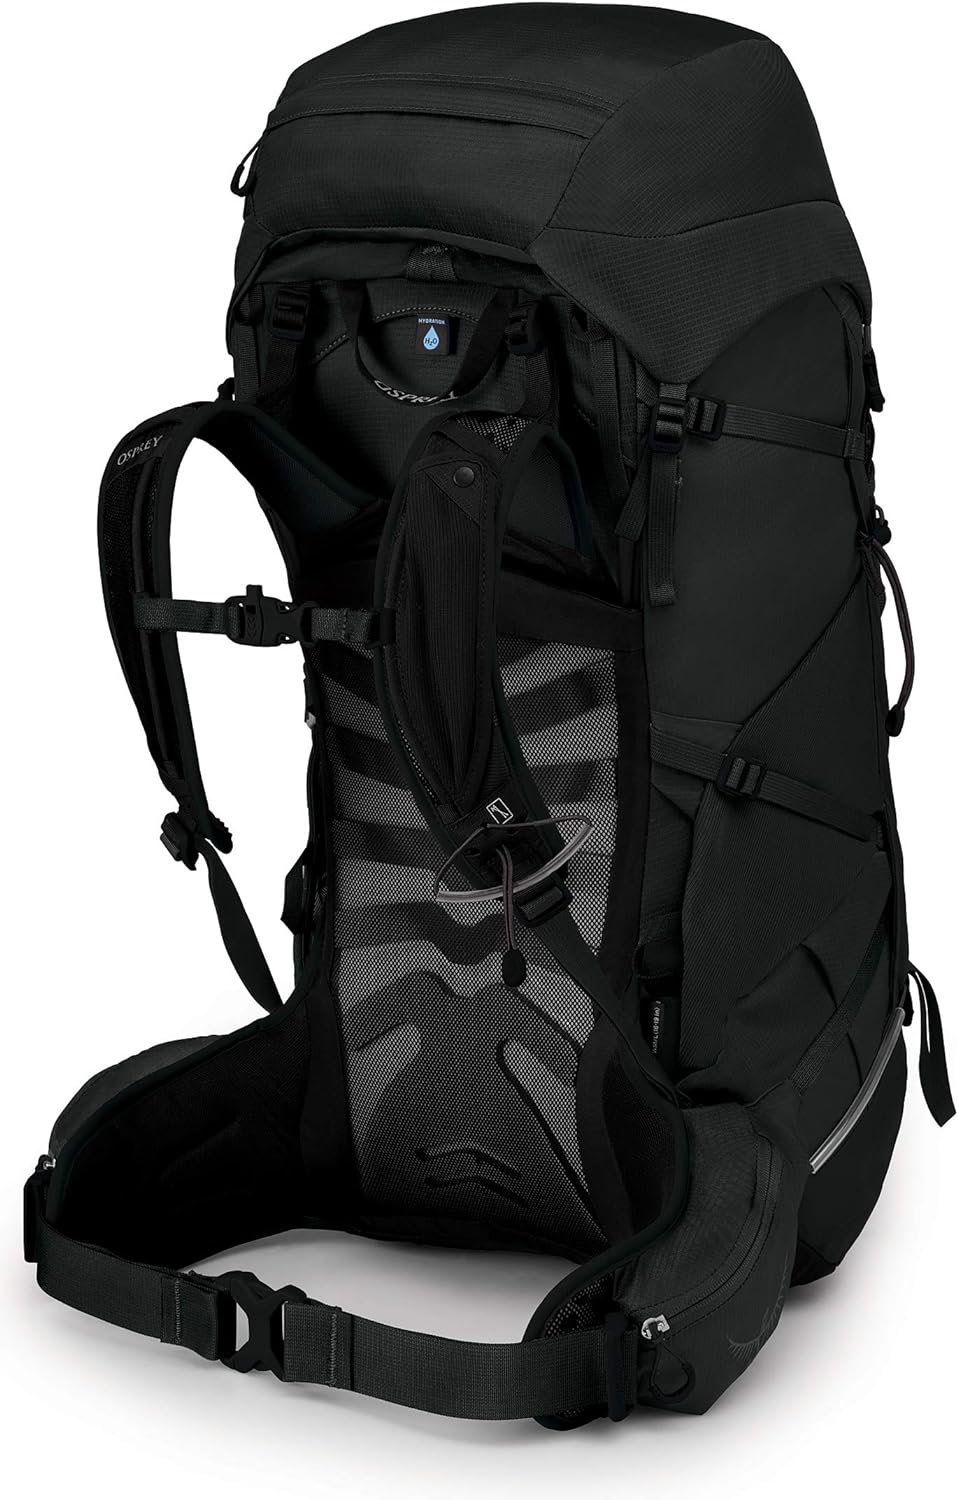 Osprey Tempest 40 Women's Hiking Backpack